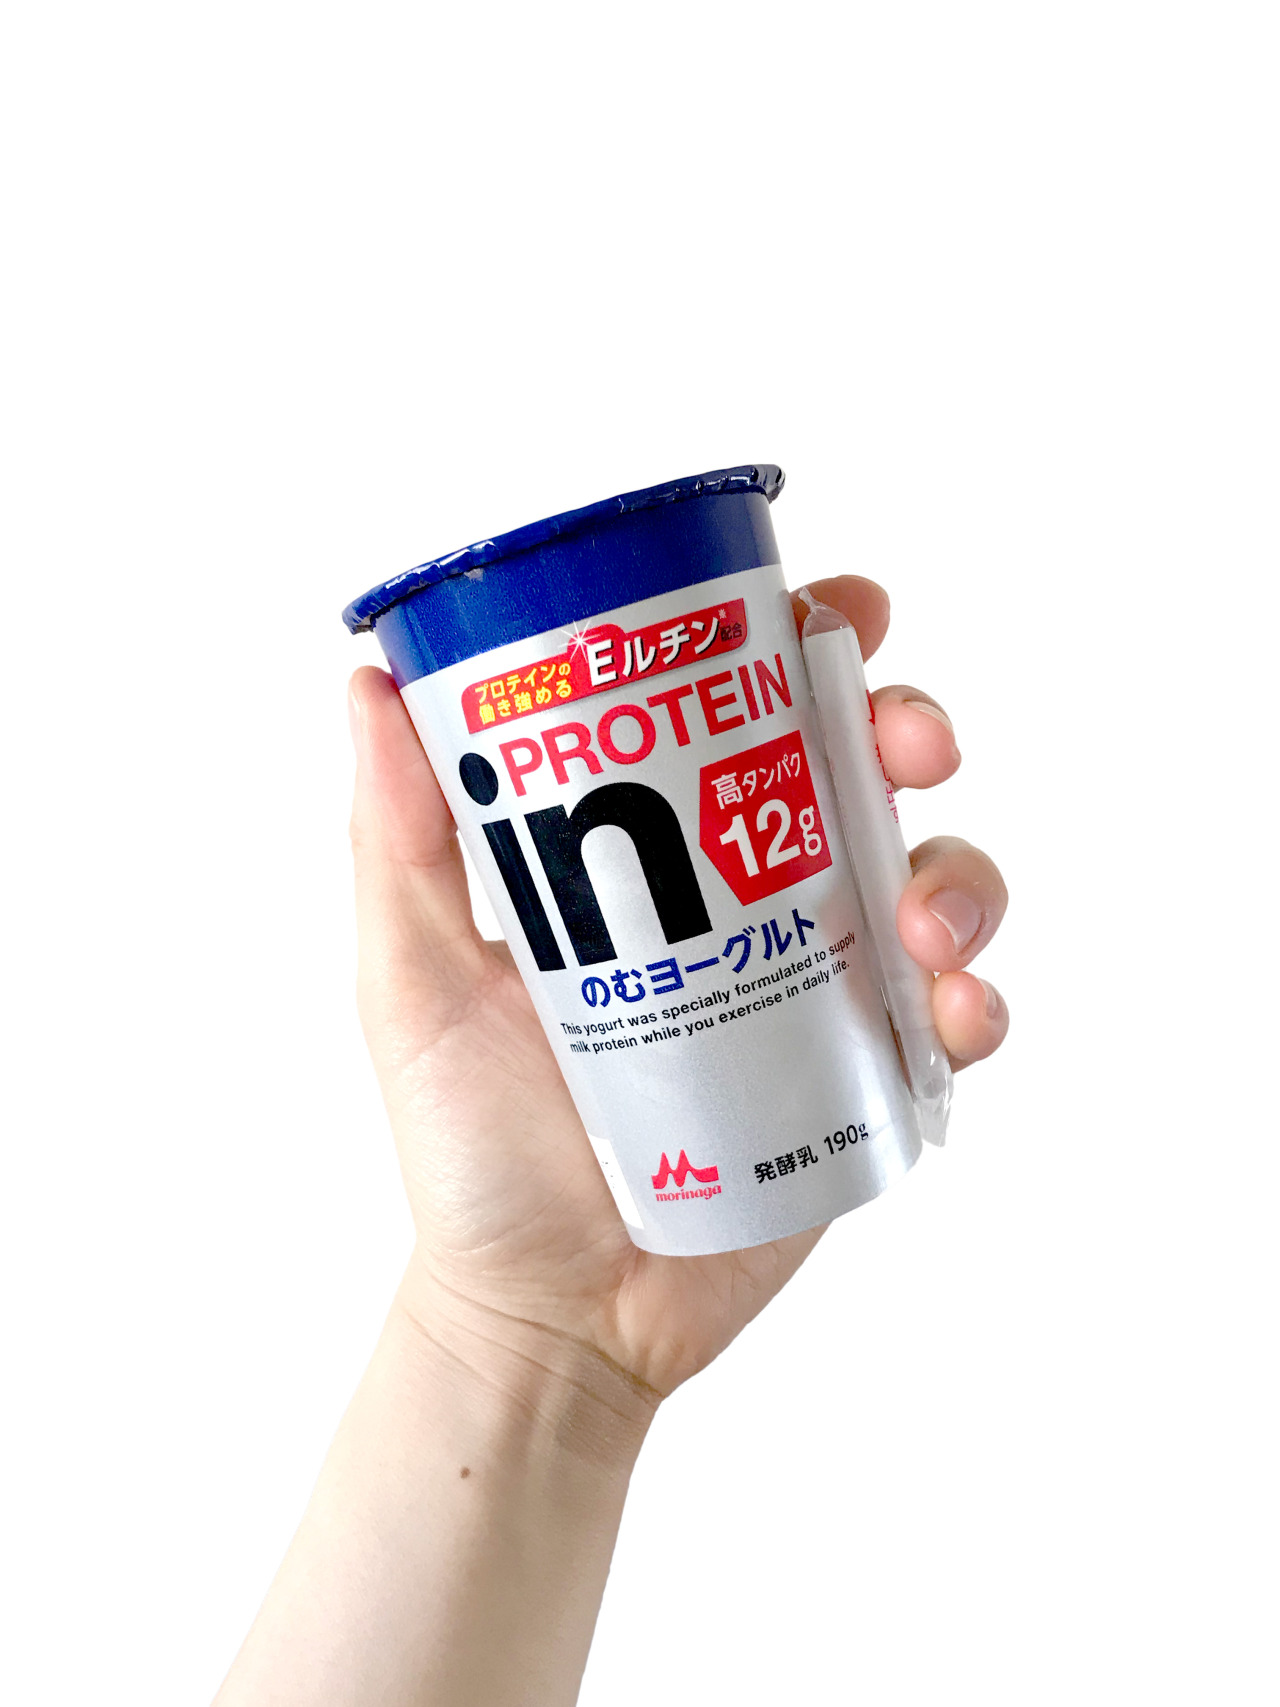 Yoghurt — inPROTEIN のむヨーグルト inブランドから初の飲むヨーグルトが4 13に登場????...